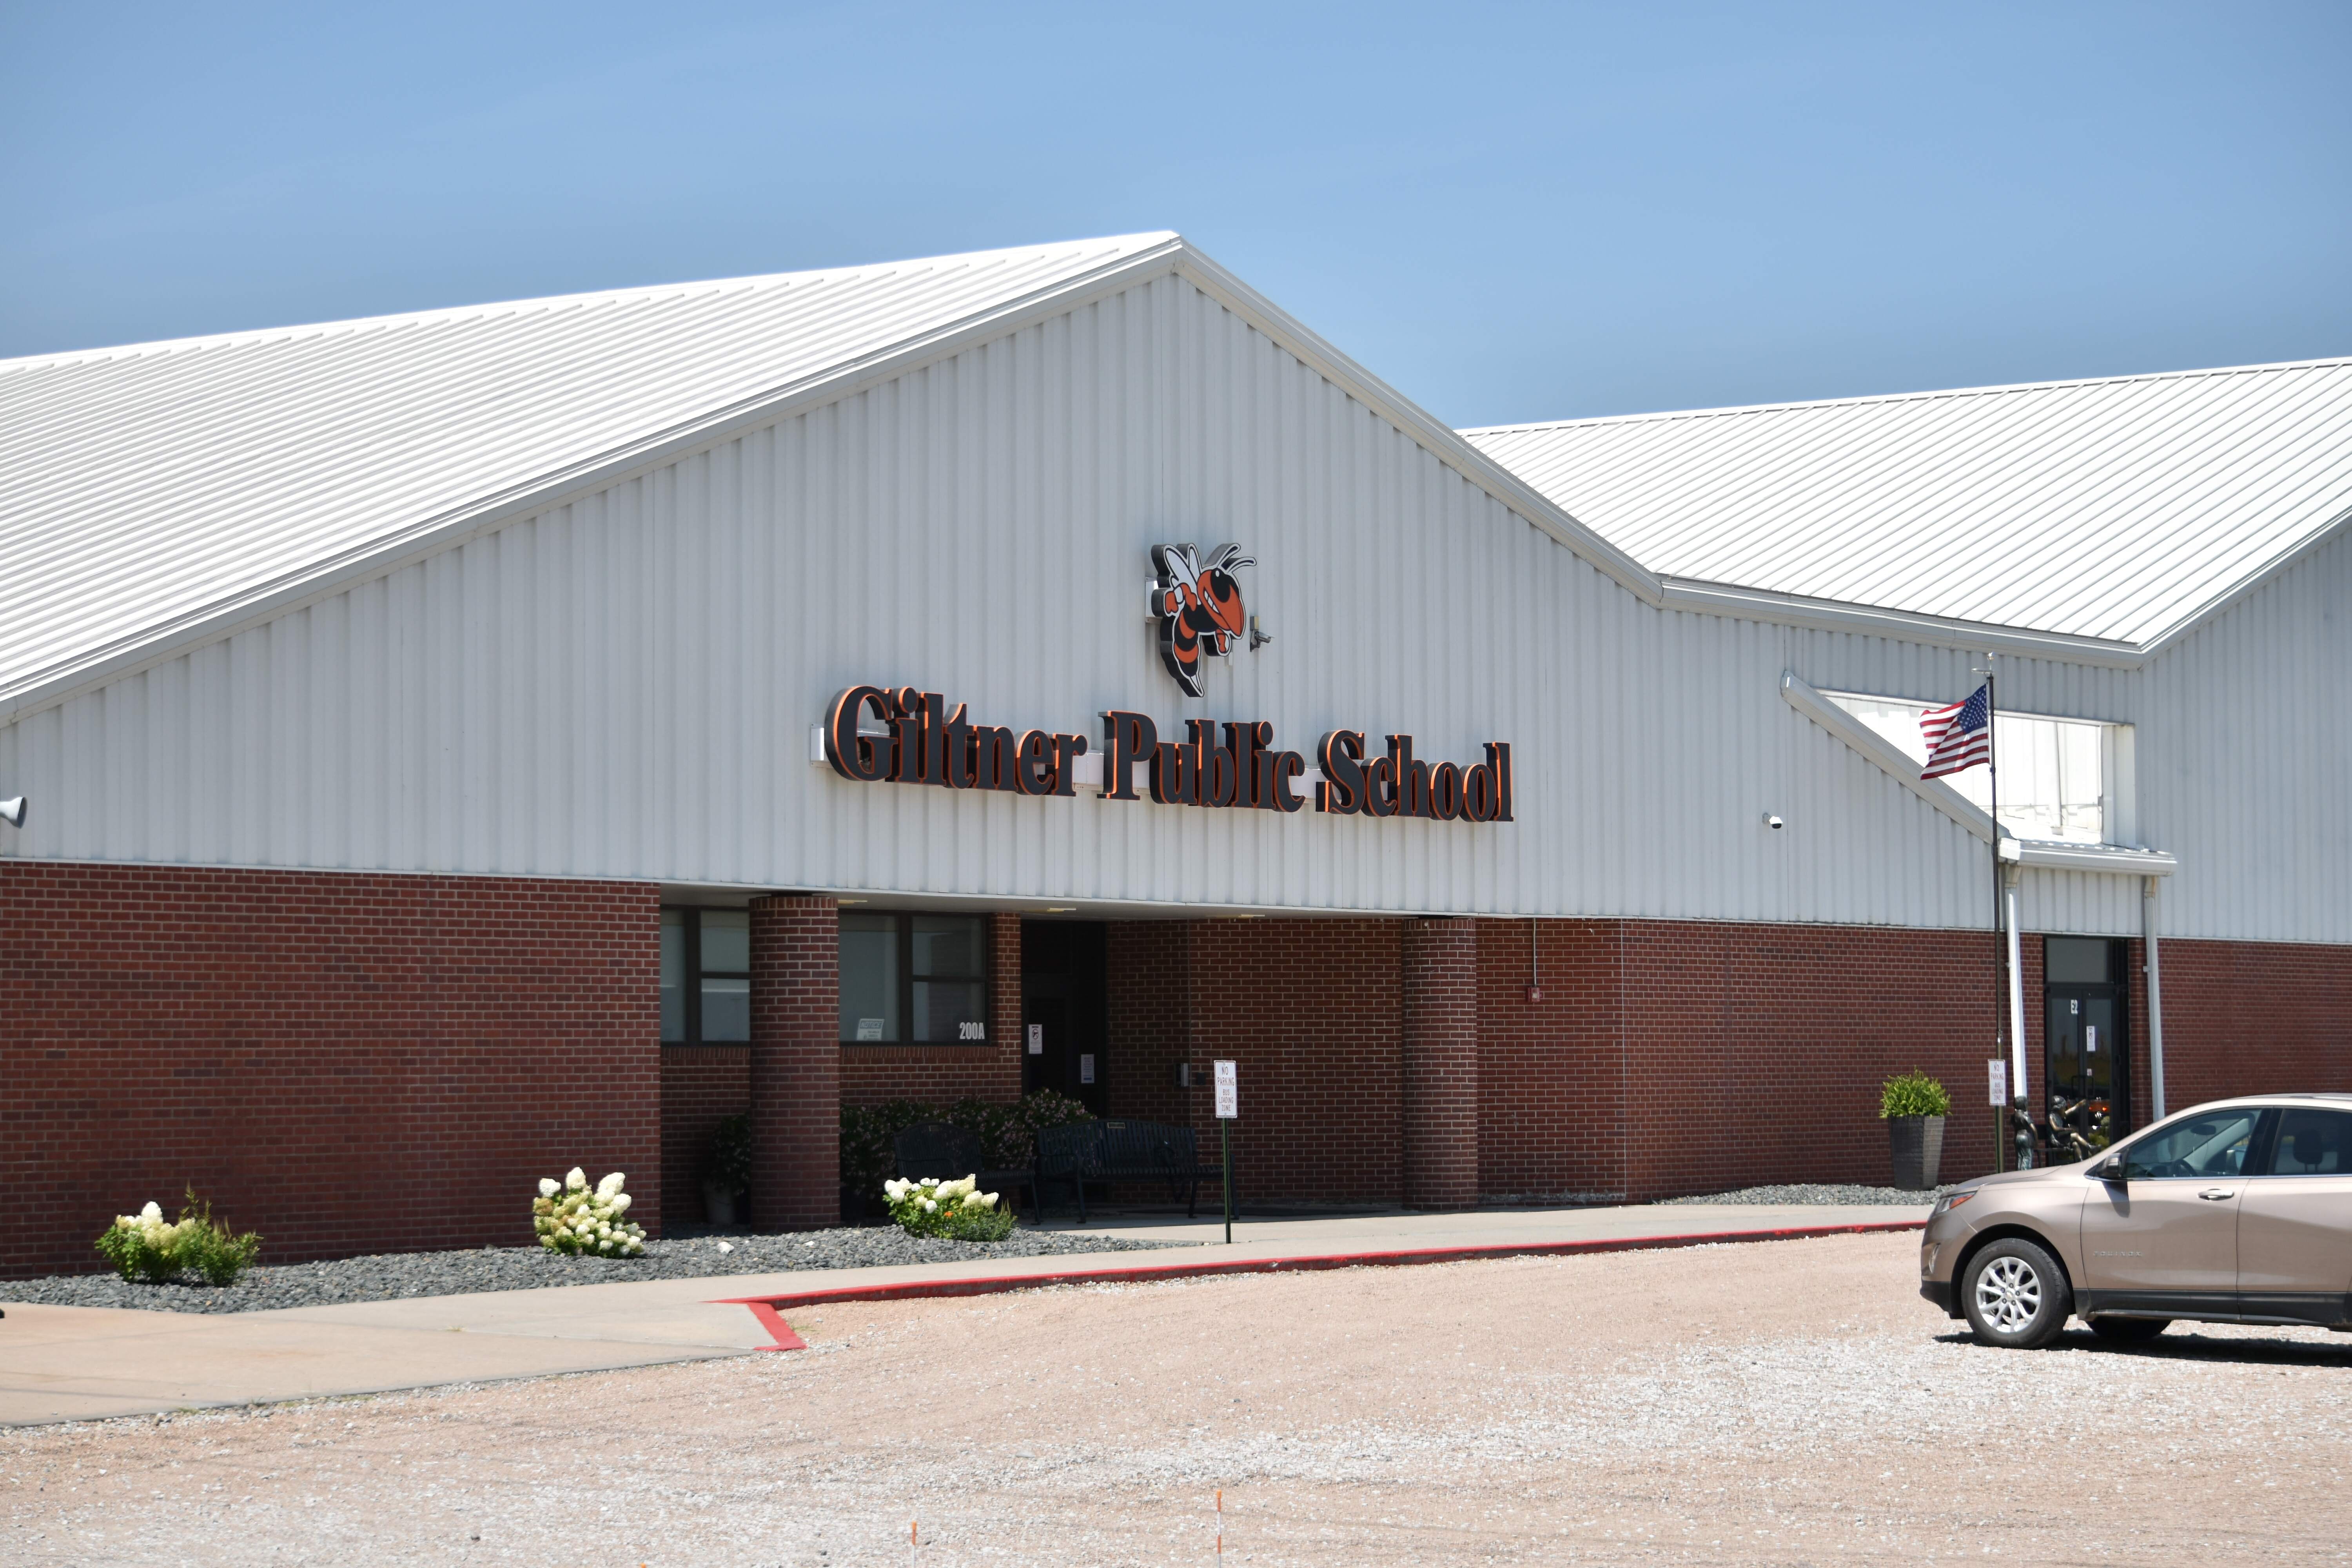 Giltner Public School Building